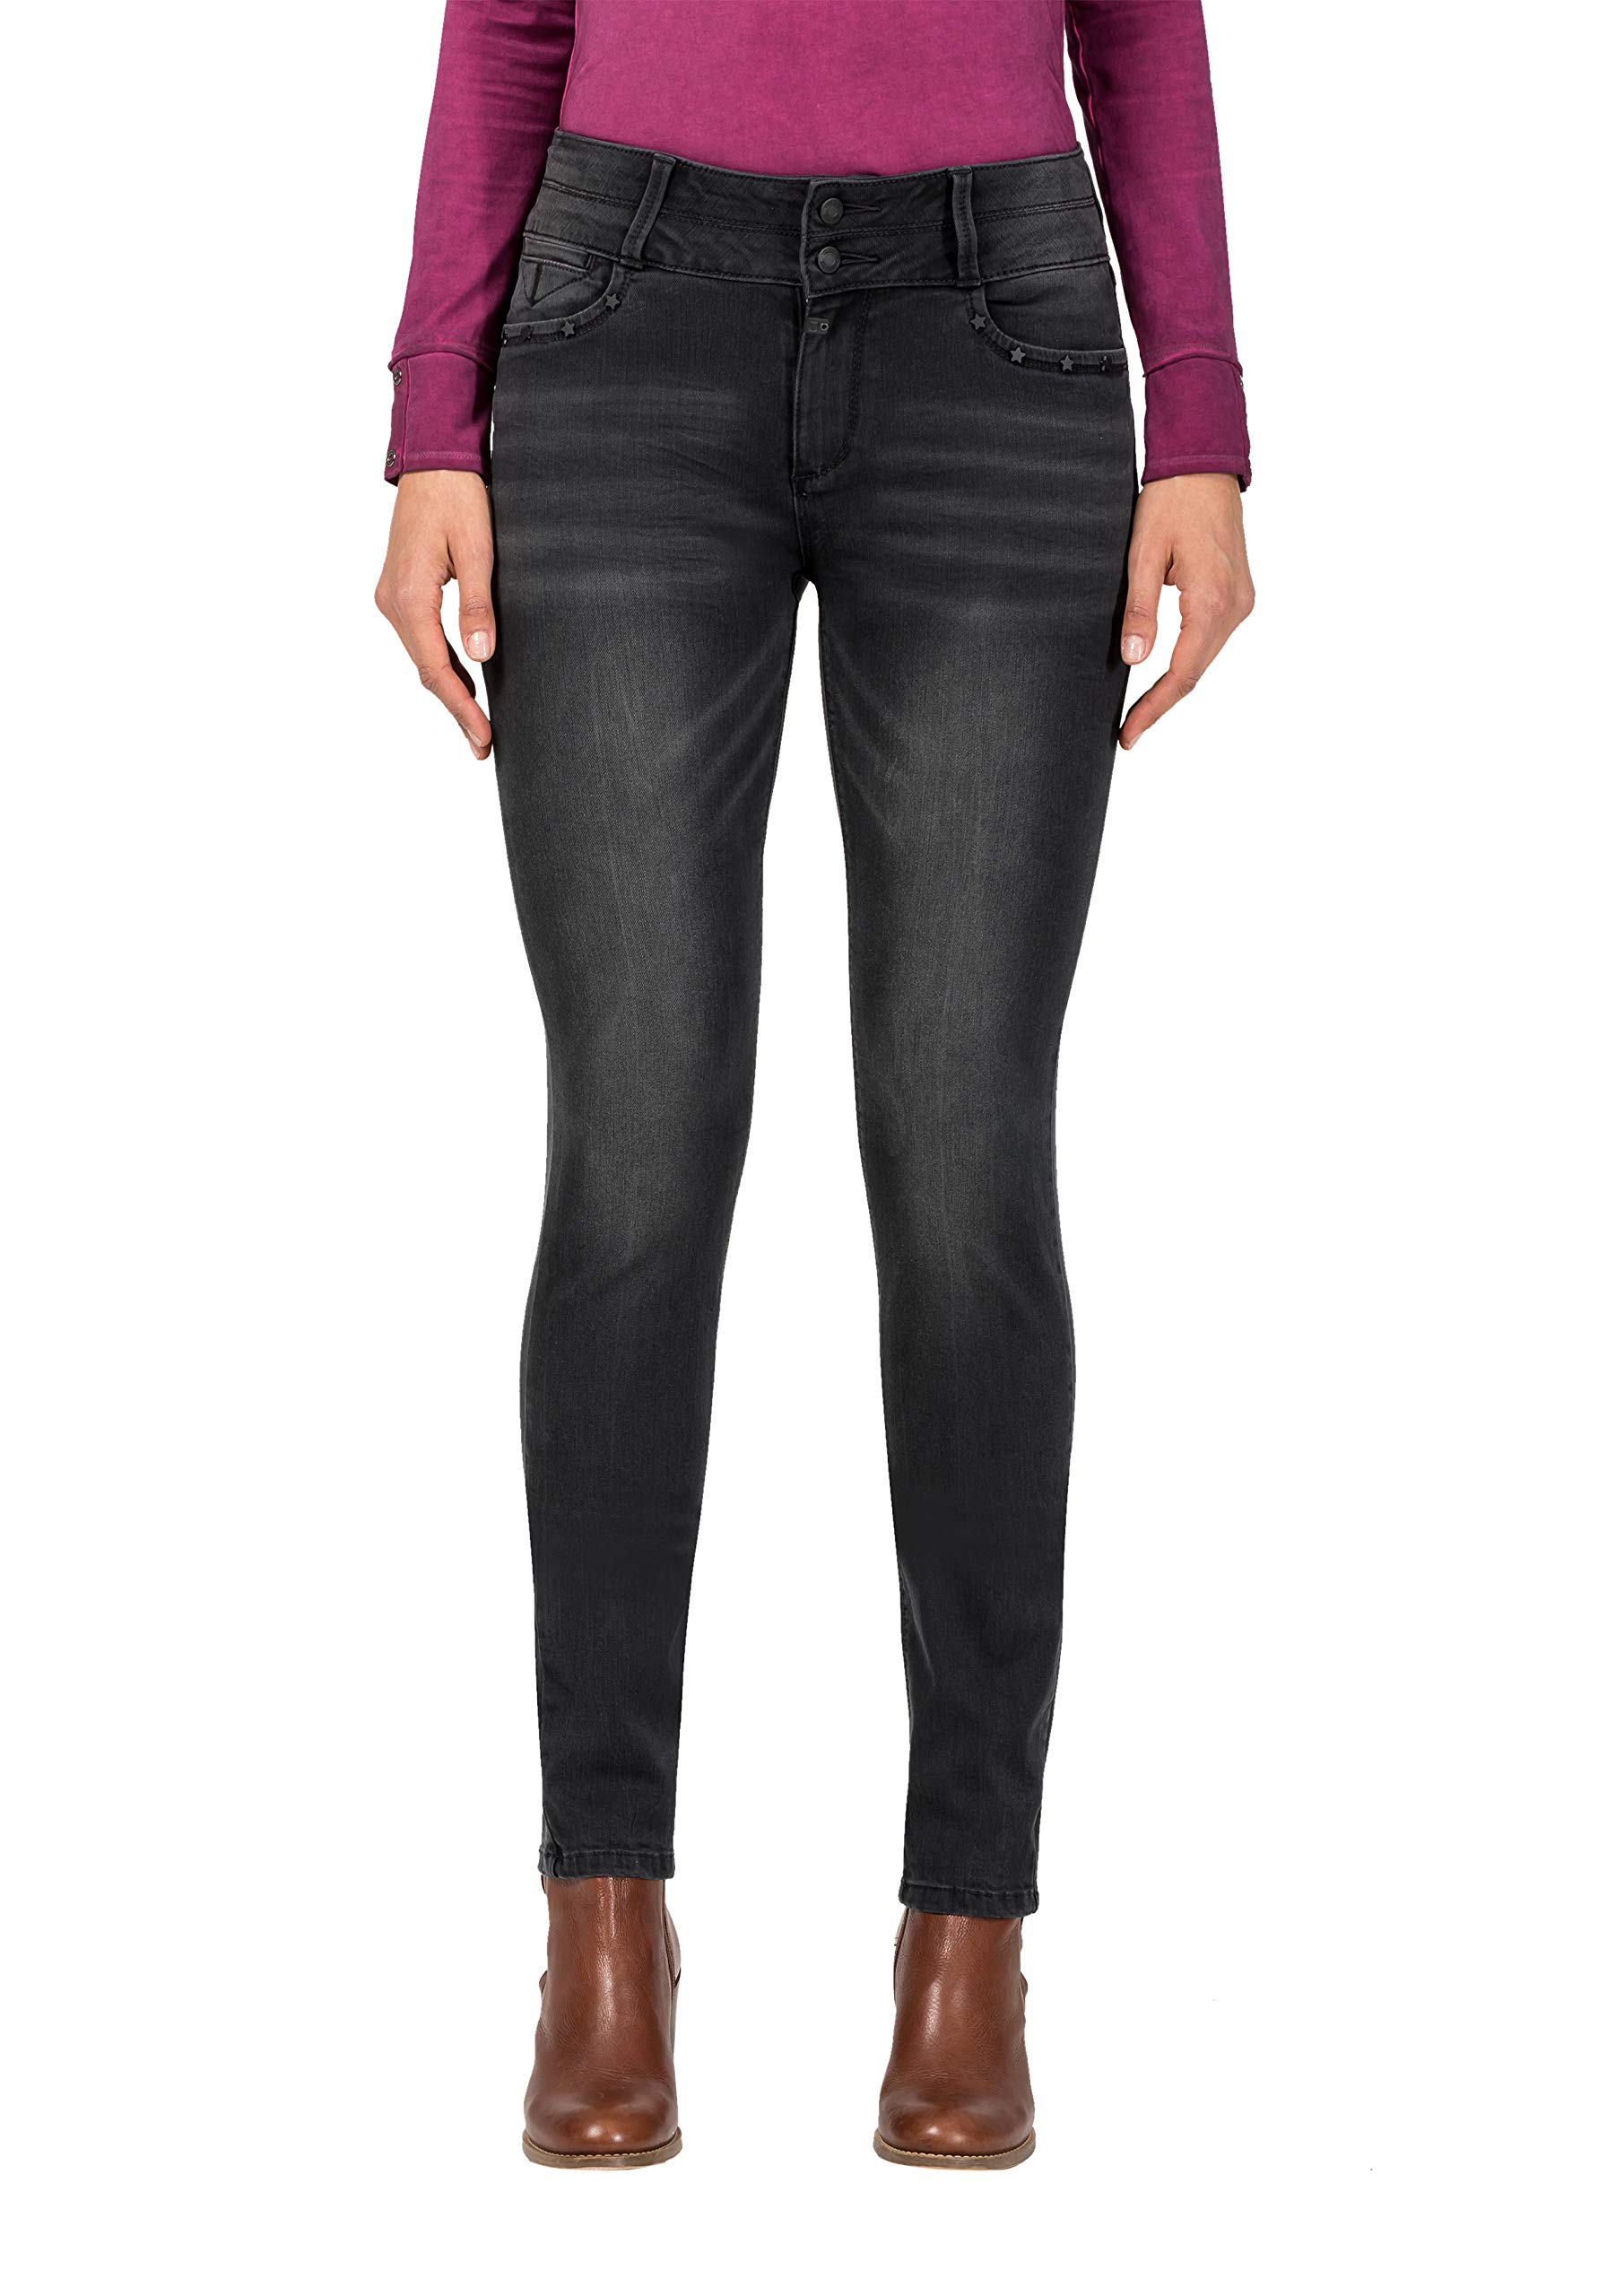 Timezone Damen EnyaTZ Womanshape Slim Jeans, Black Brushed Wash 9058, W29/L34 (Herstellergröße:29/34)